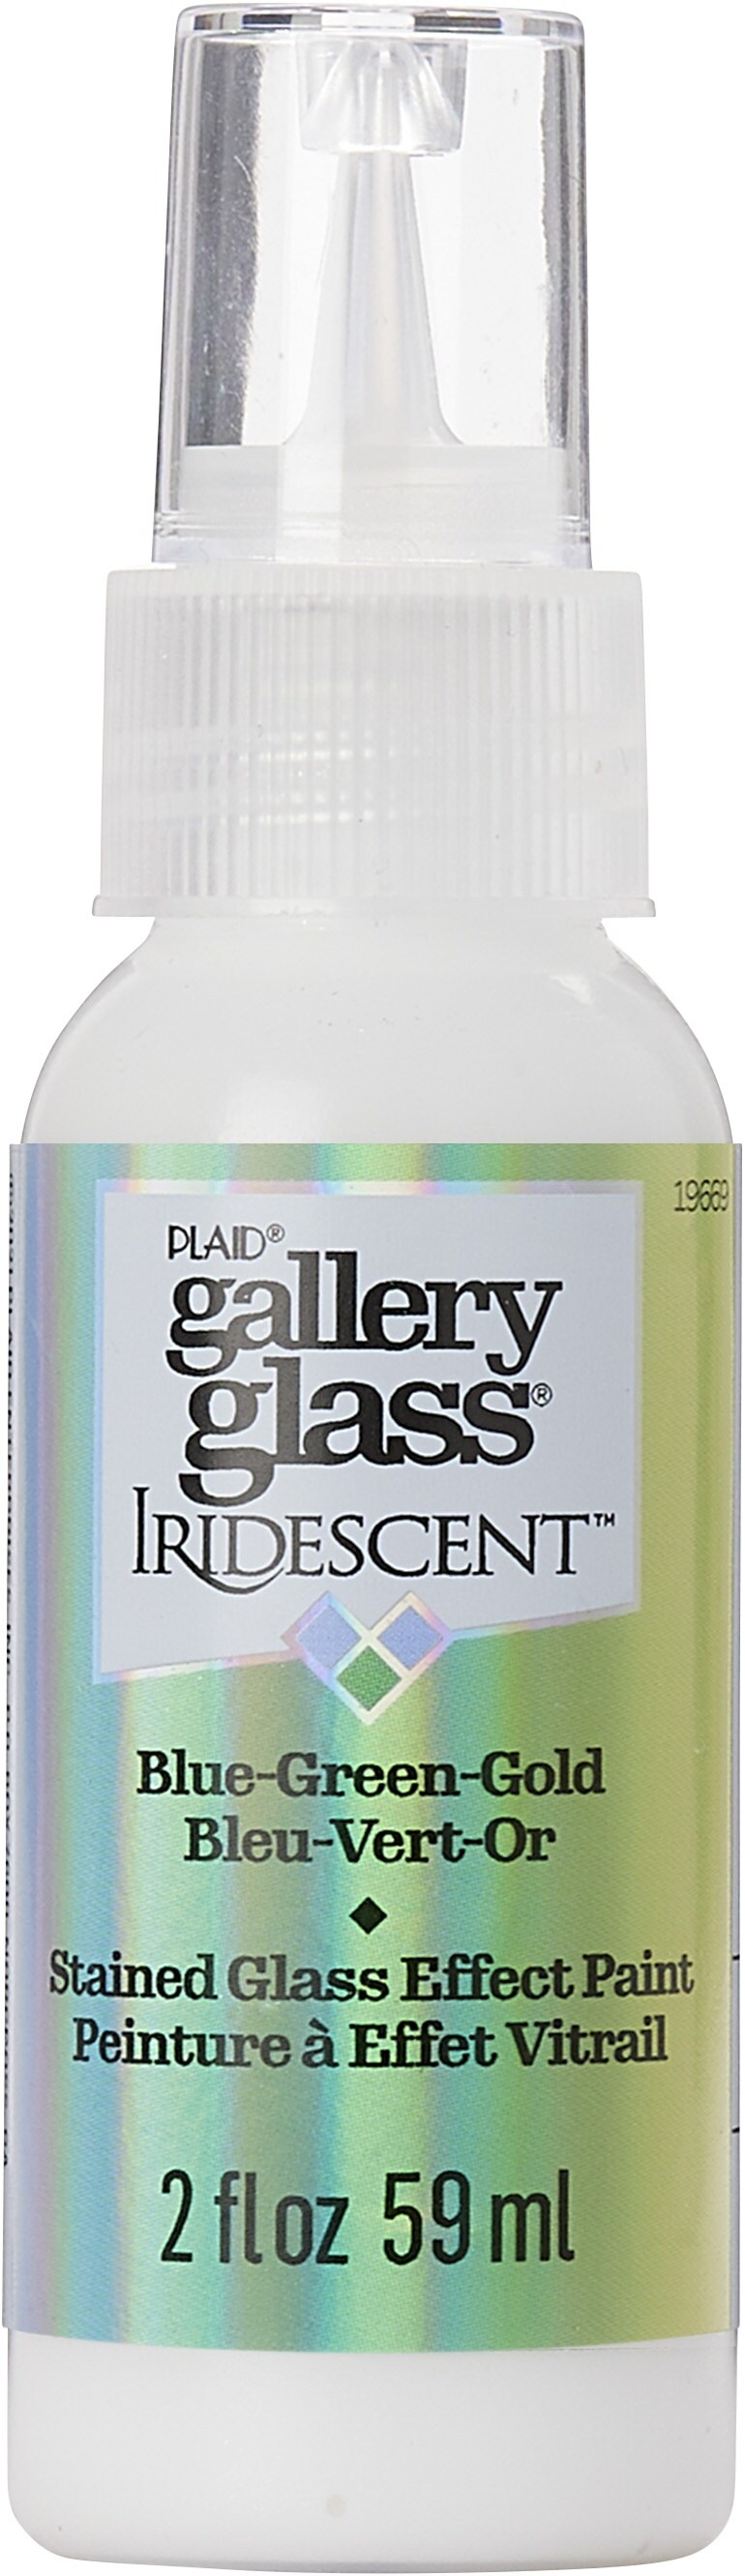 FolkArt Gallery Glass Paint 2oz-Iridescent Violet/Green/Blue